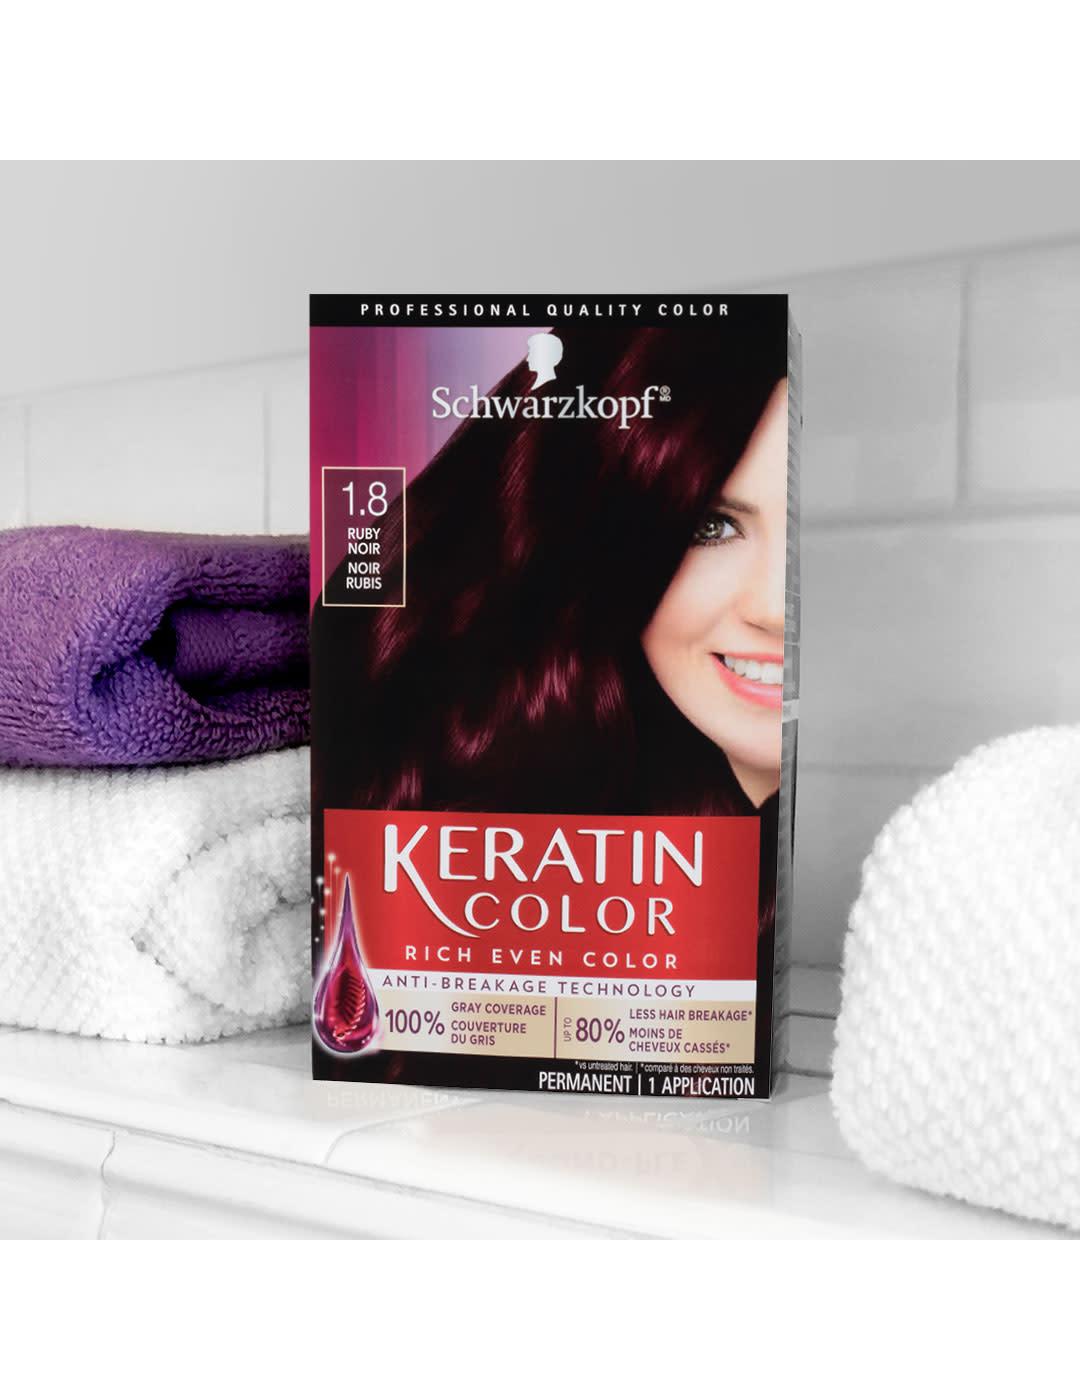 Schwarzkopf Keratin Color 1.8 Ruby Noir Anti Age Hair Color; image 2 of 5